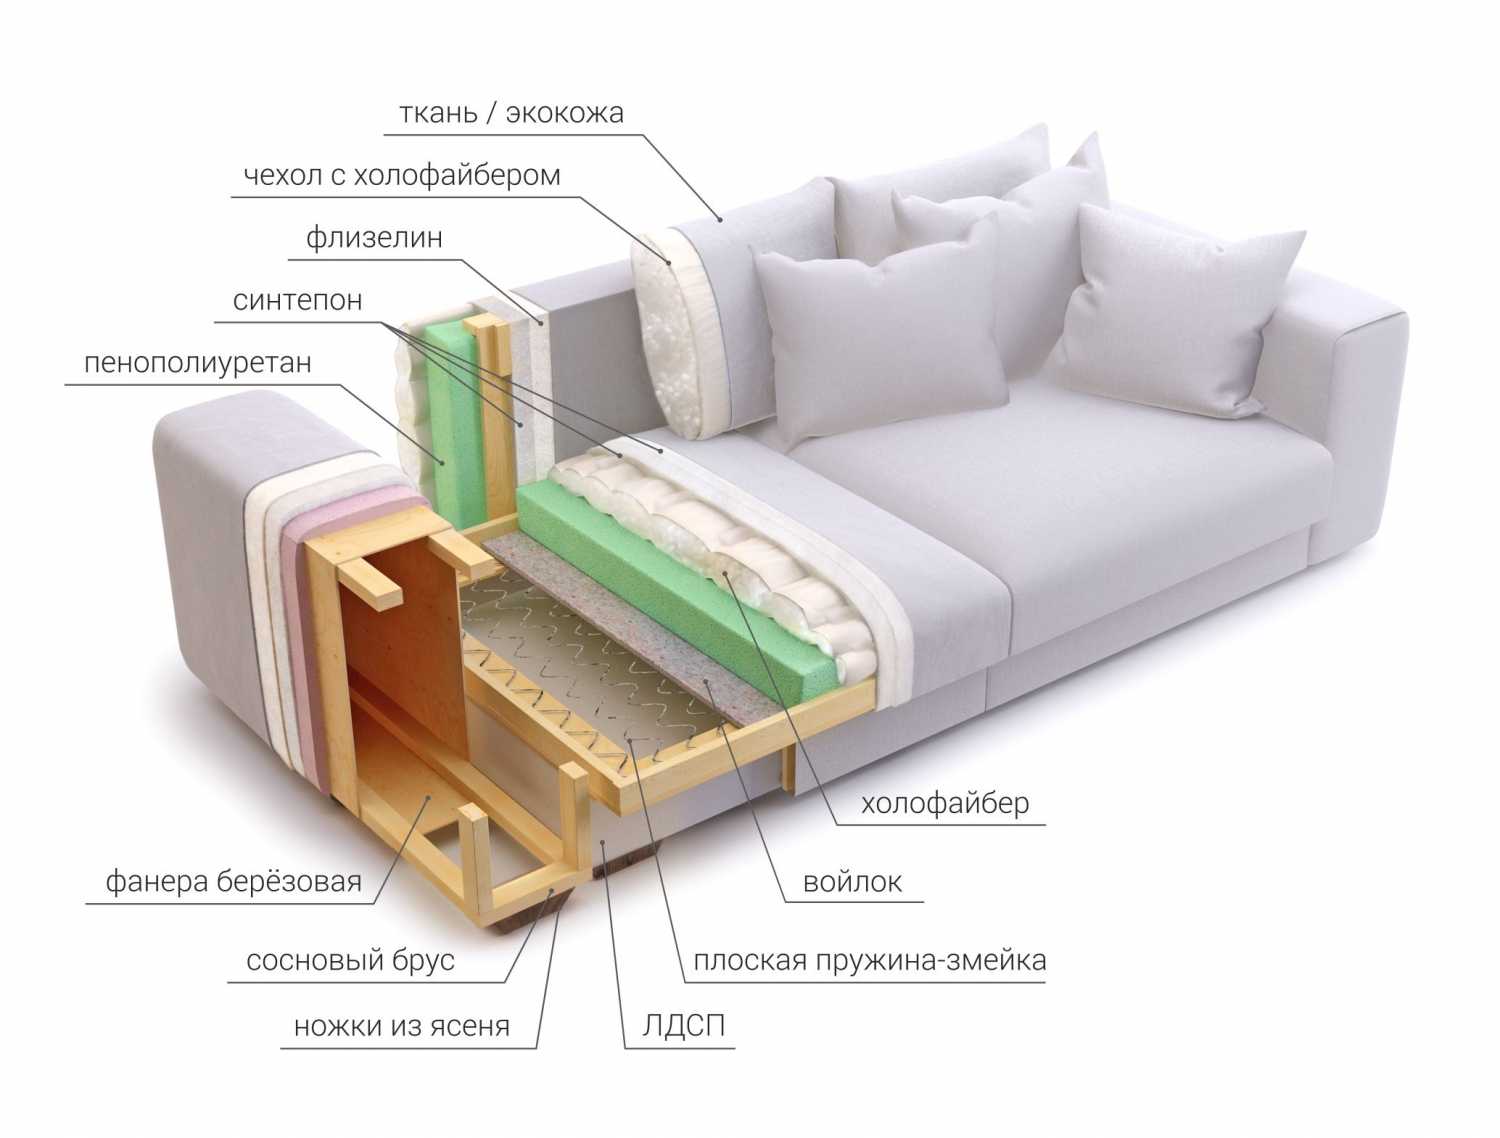 23 вида тканей для обивки дивана| 5 критериев выбора